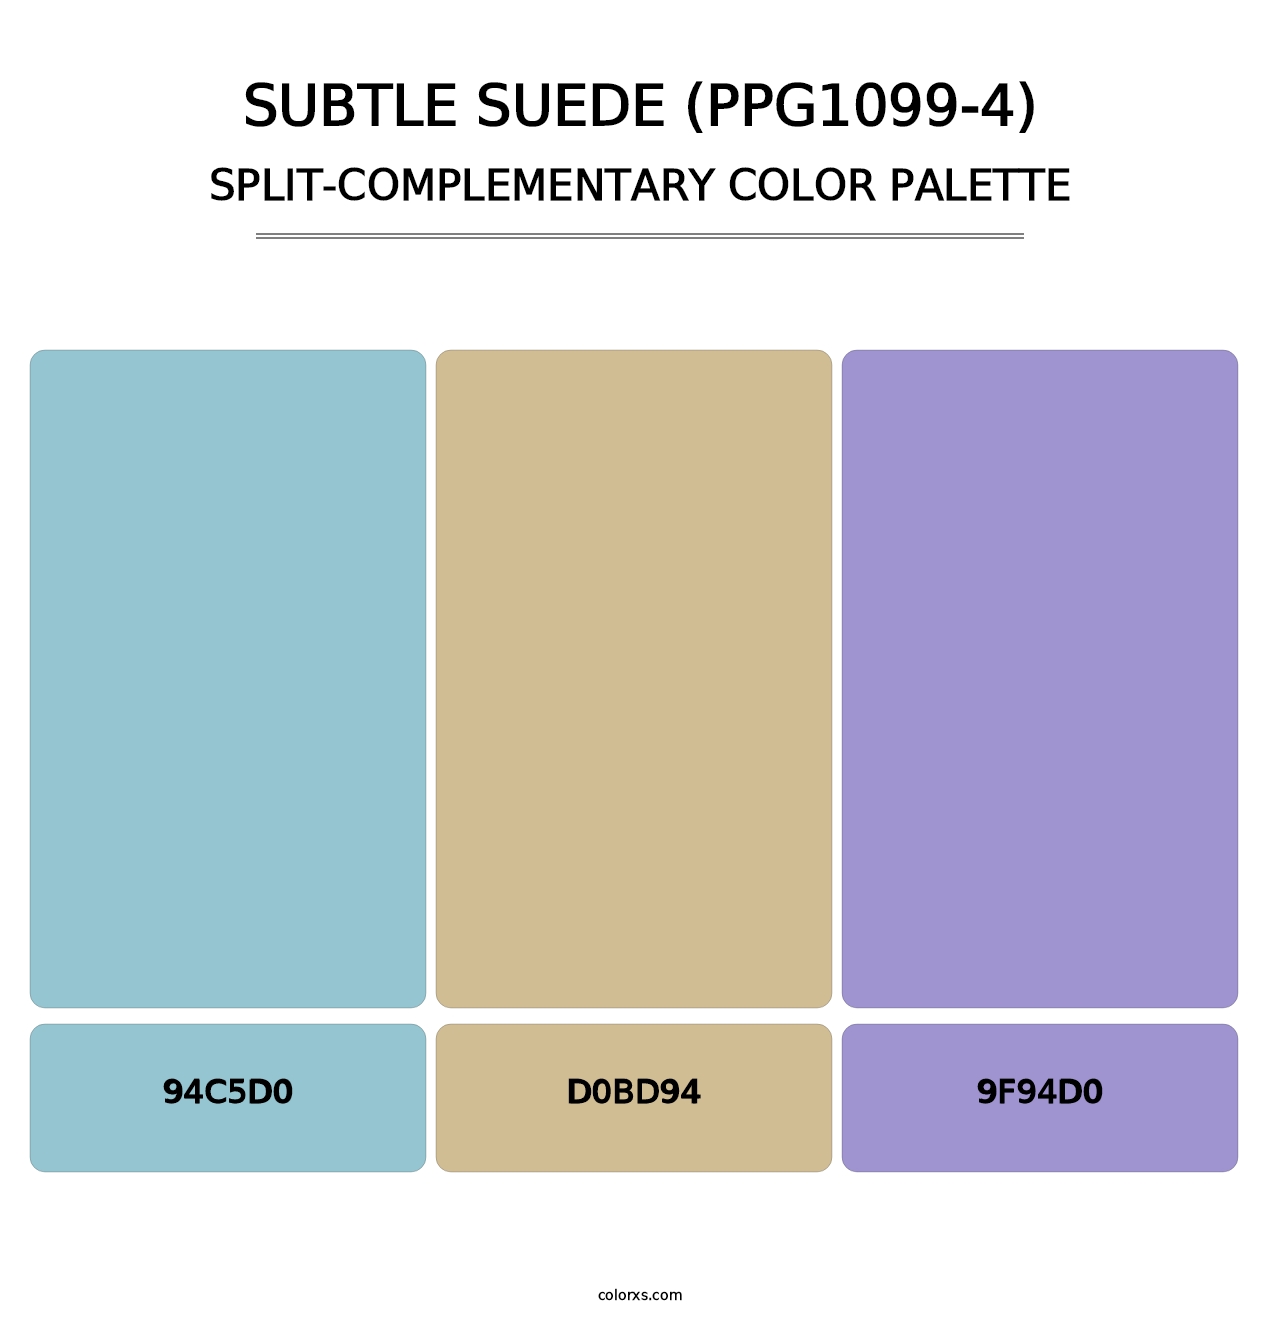 Subtle Suede (PPG1099-4) - Split-Complementary Color Palette